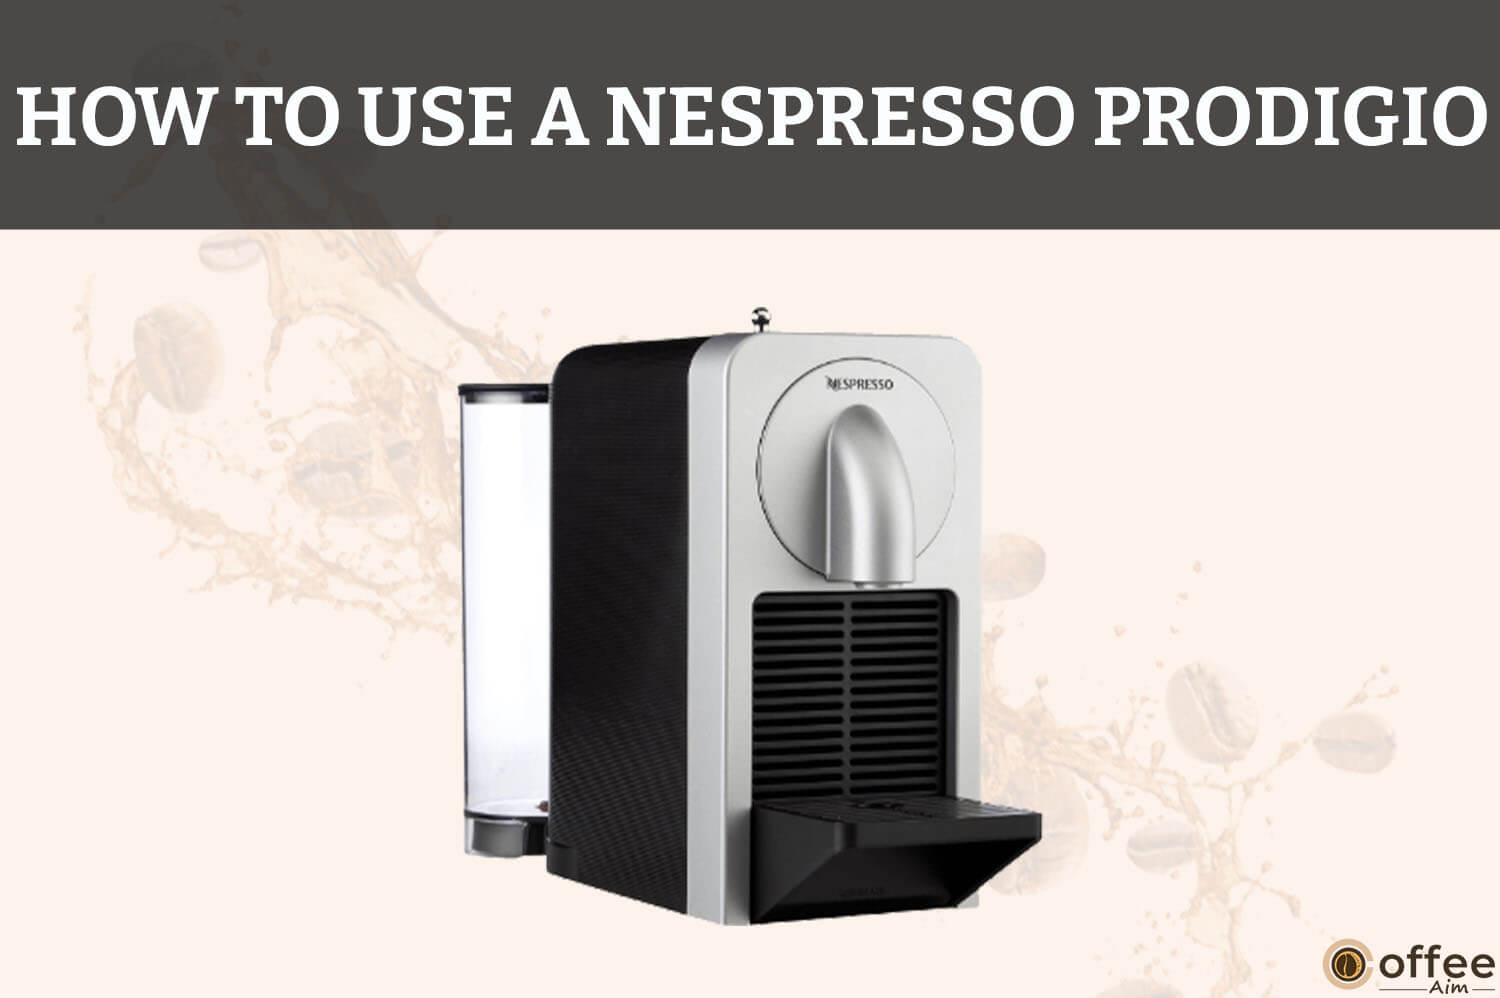 To Use A Nespresso Prodigio